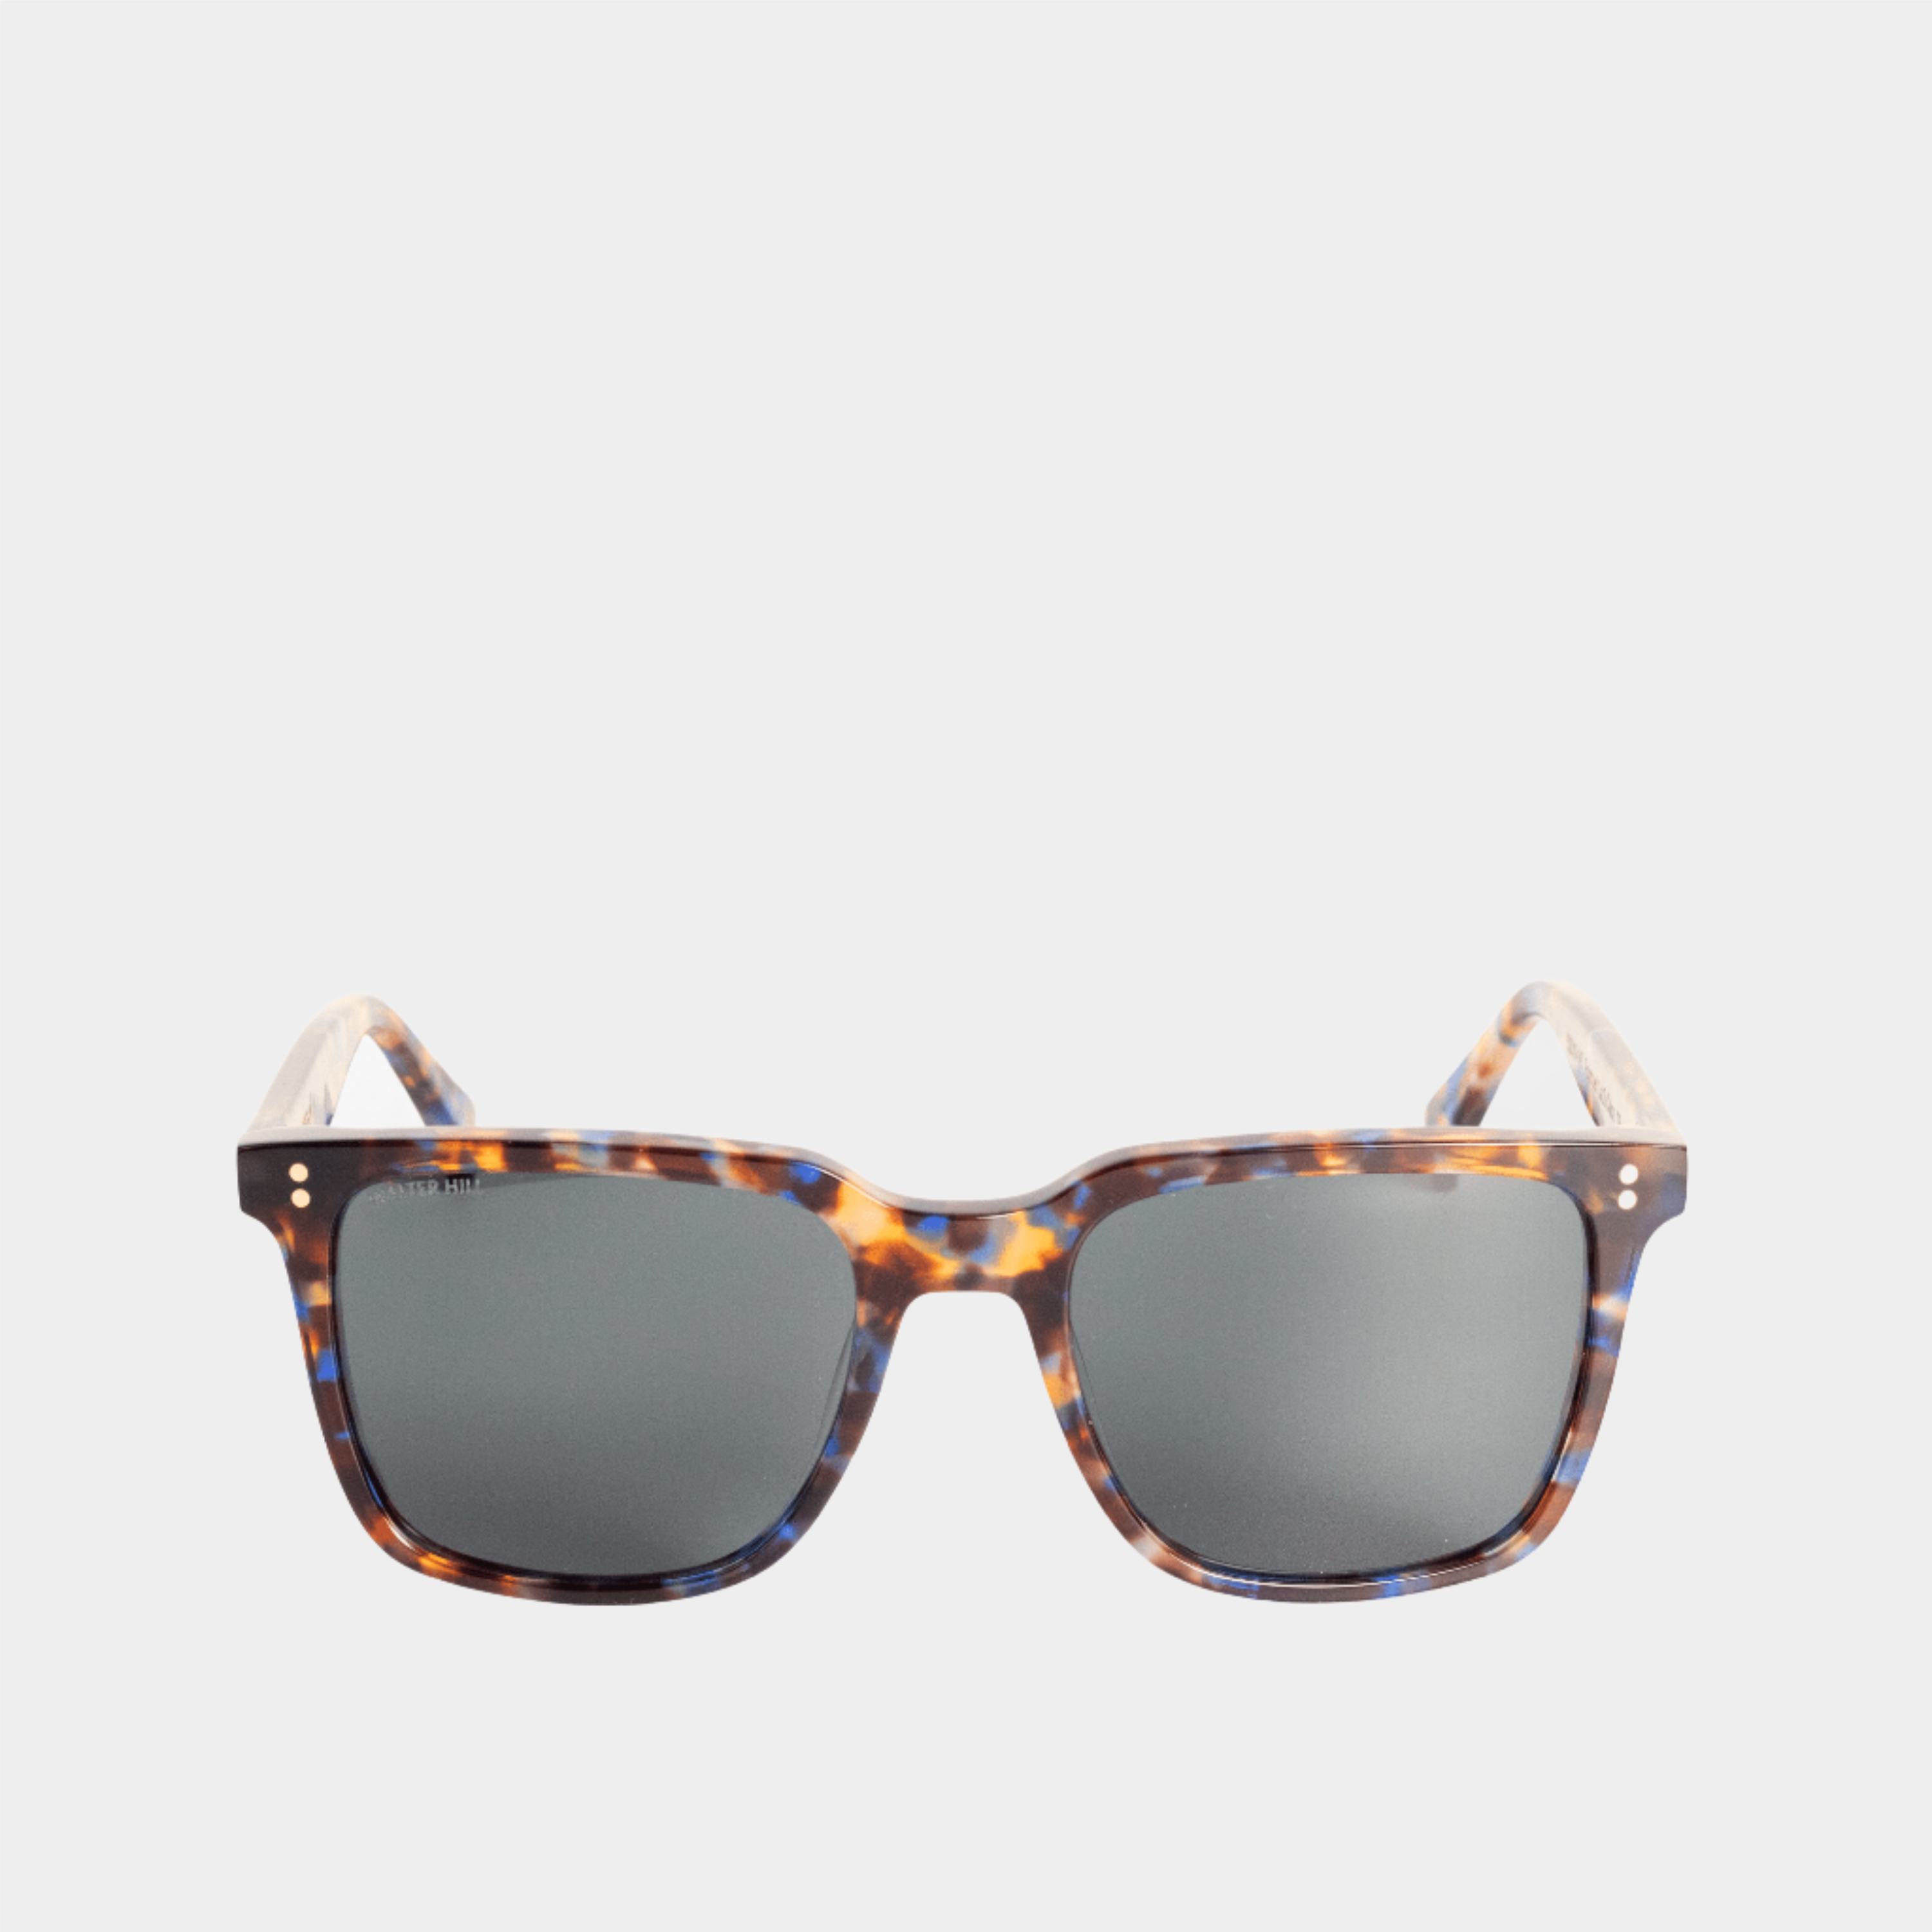 Walter Hill Sunglasses Tortoise Blue / Standard / Polarized Cat.3 MARSON - Tortoise Blue